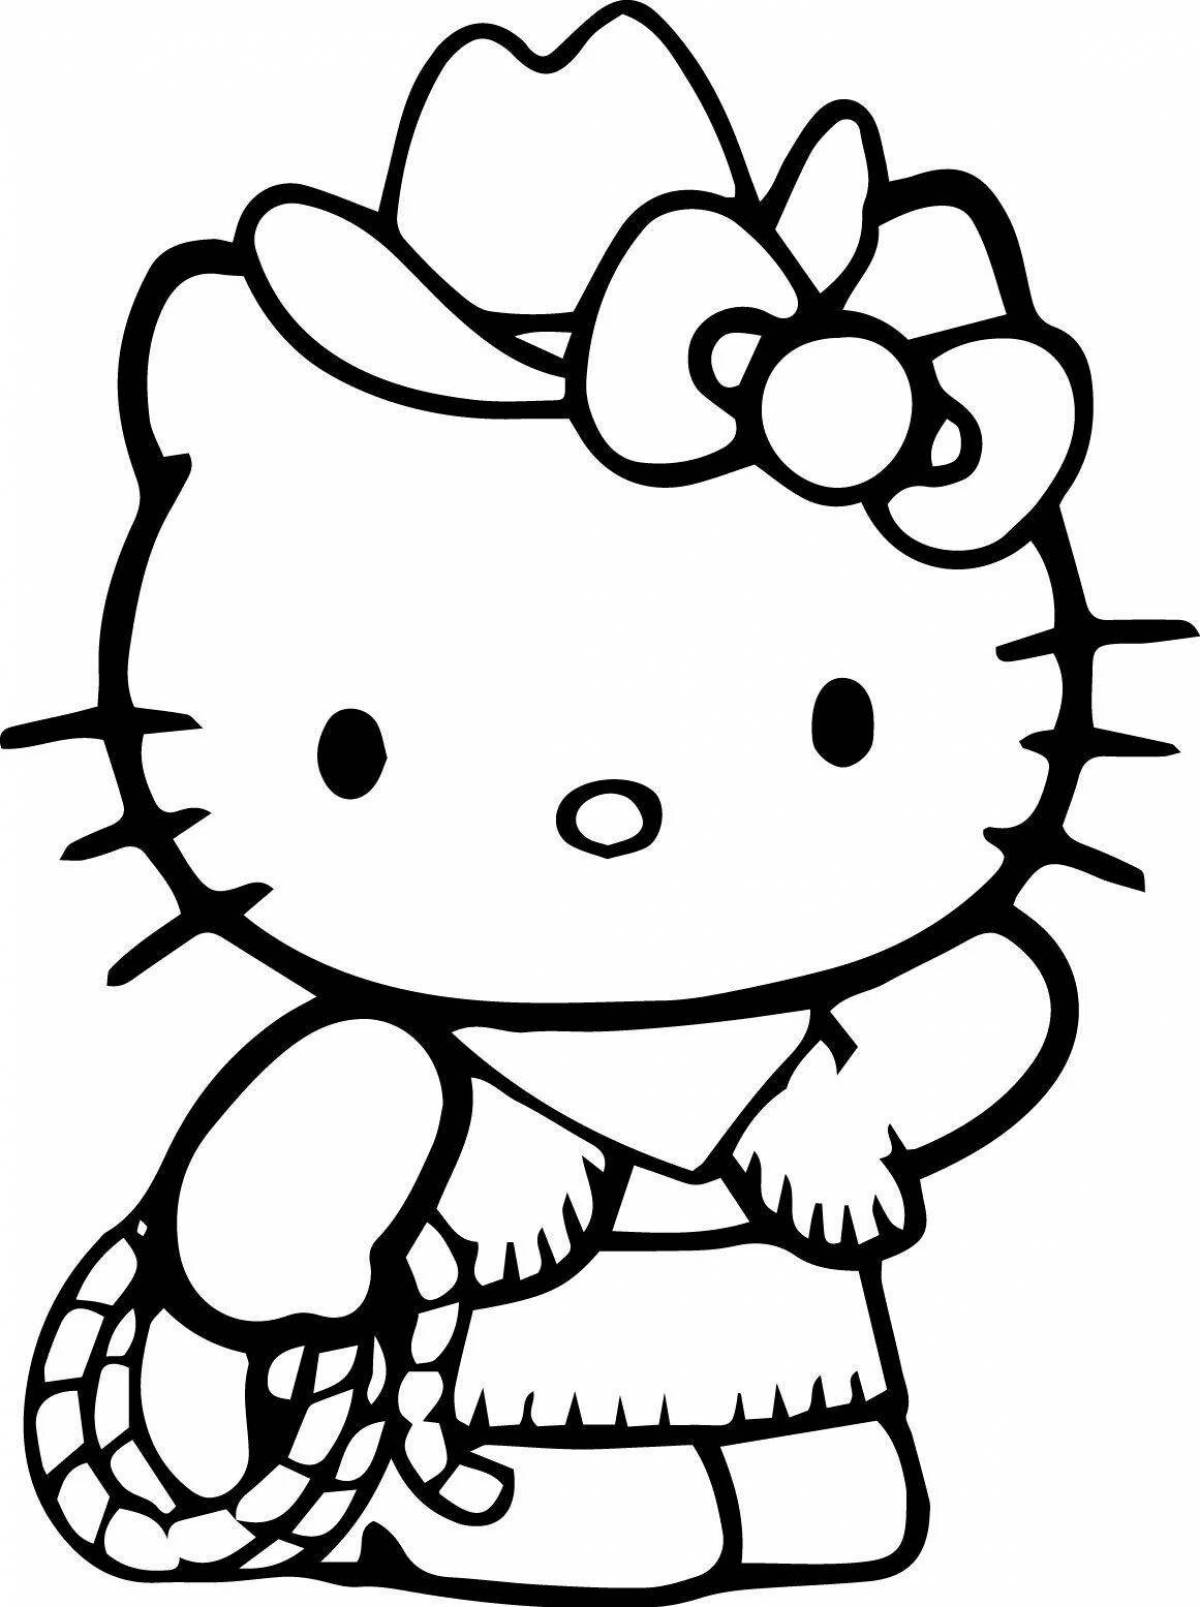 Раскрашенная hello kitty. Раскраска Хелло Китти. Хэллоу Китти раскраска. Раскраски для девочек Хеллоу Китти. Раскраска Хелло Китти принцесса.